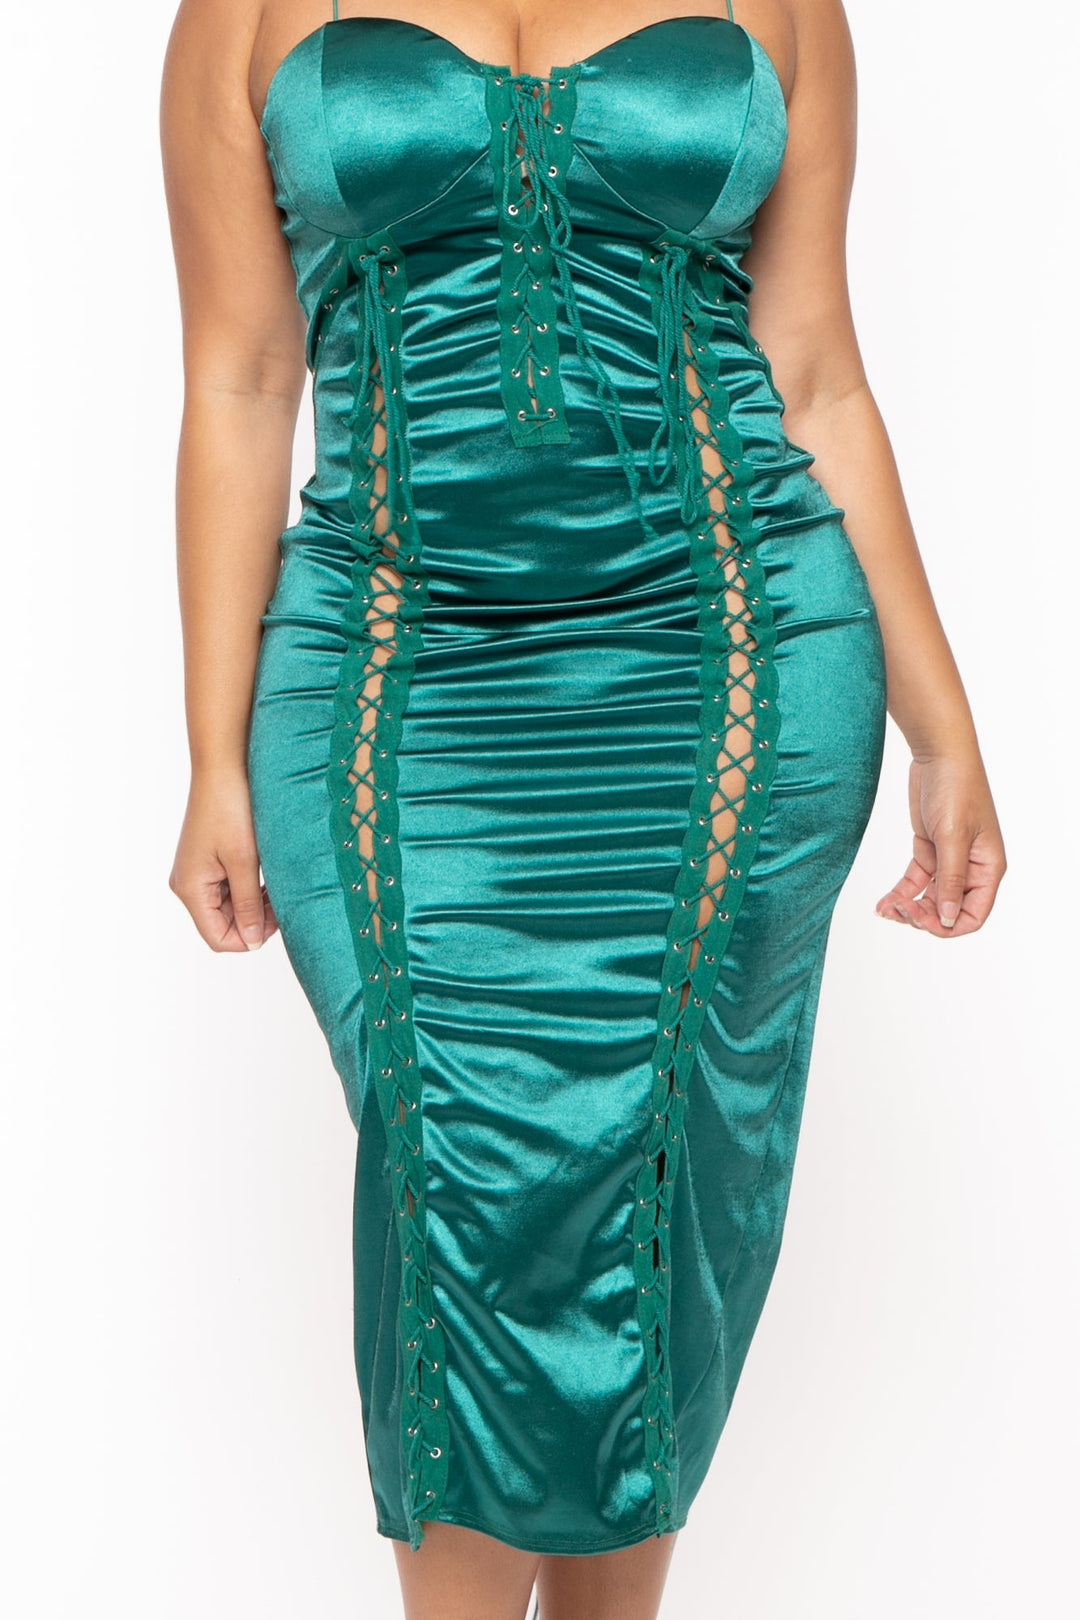 Simply2 Dresses Plus Size Celestine Lace Up Midi Dress - Green